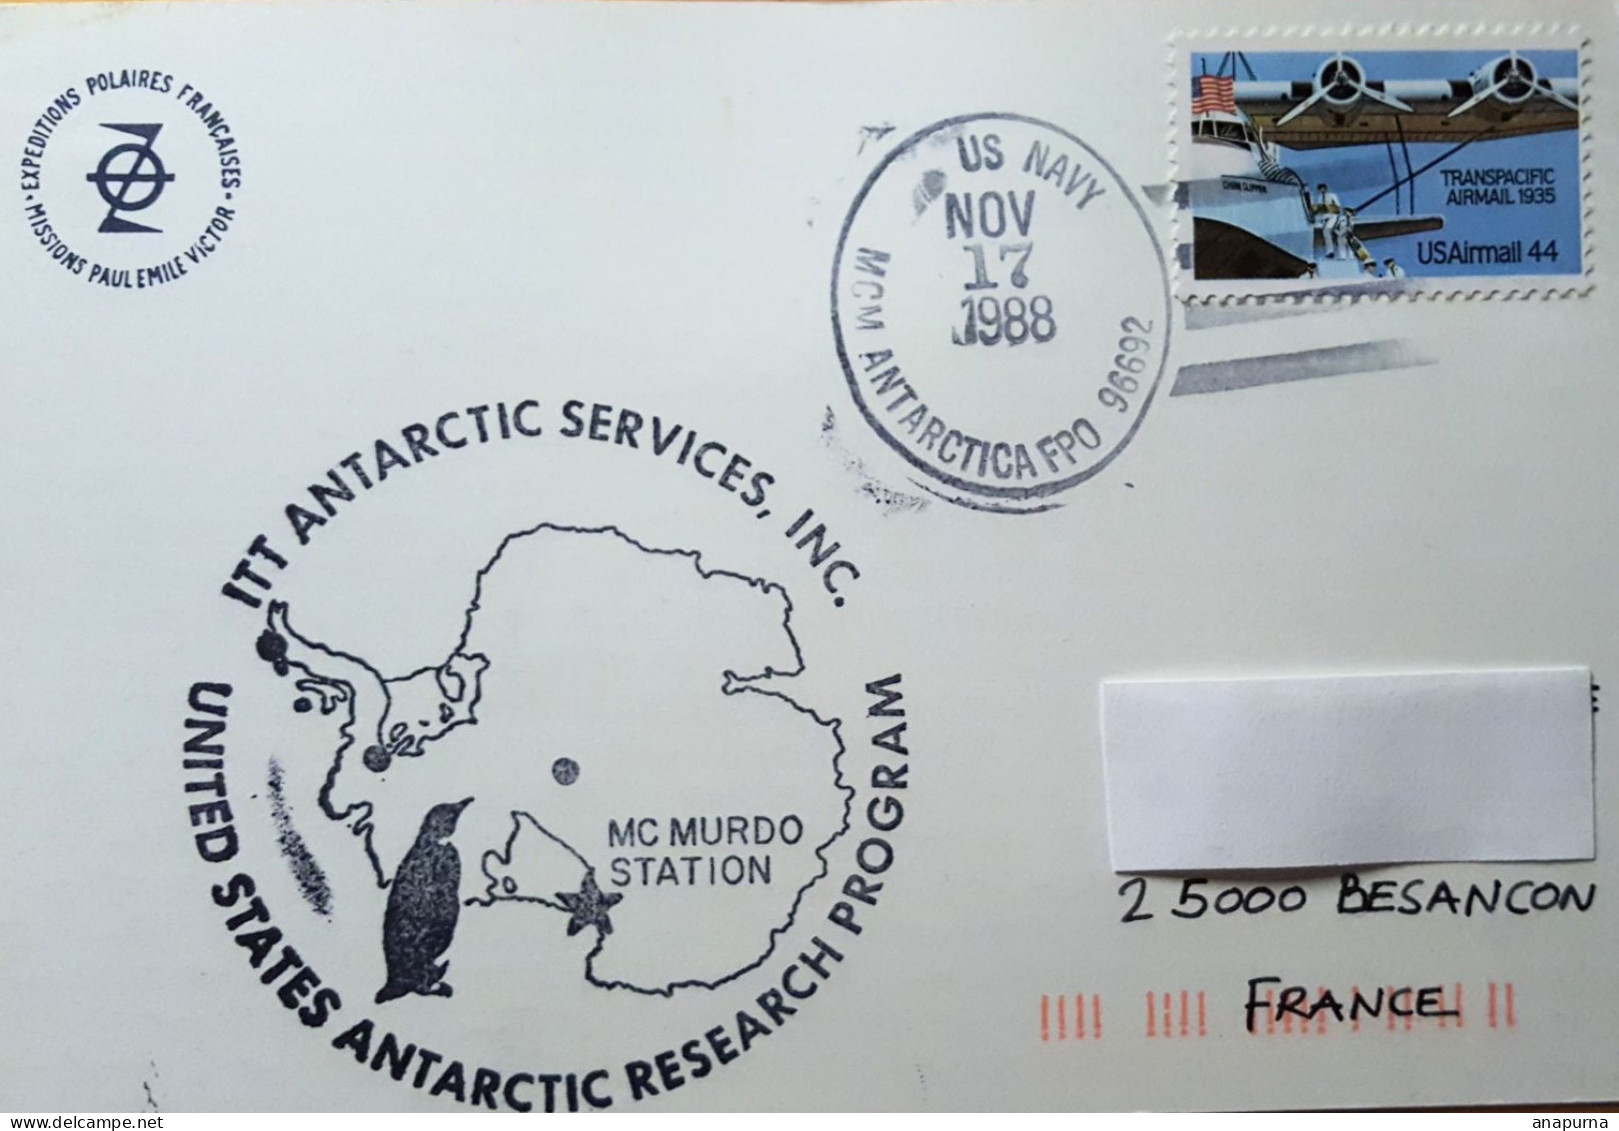 Carte Paul Emile Victor Postée à Mc Murdo 17 Nov 1988 Avec Grand Cachet Illustré US Antarctic Research Program - Programas De Investigación